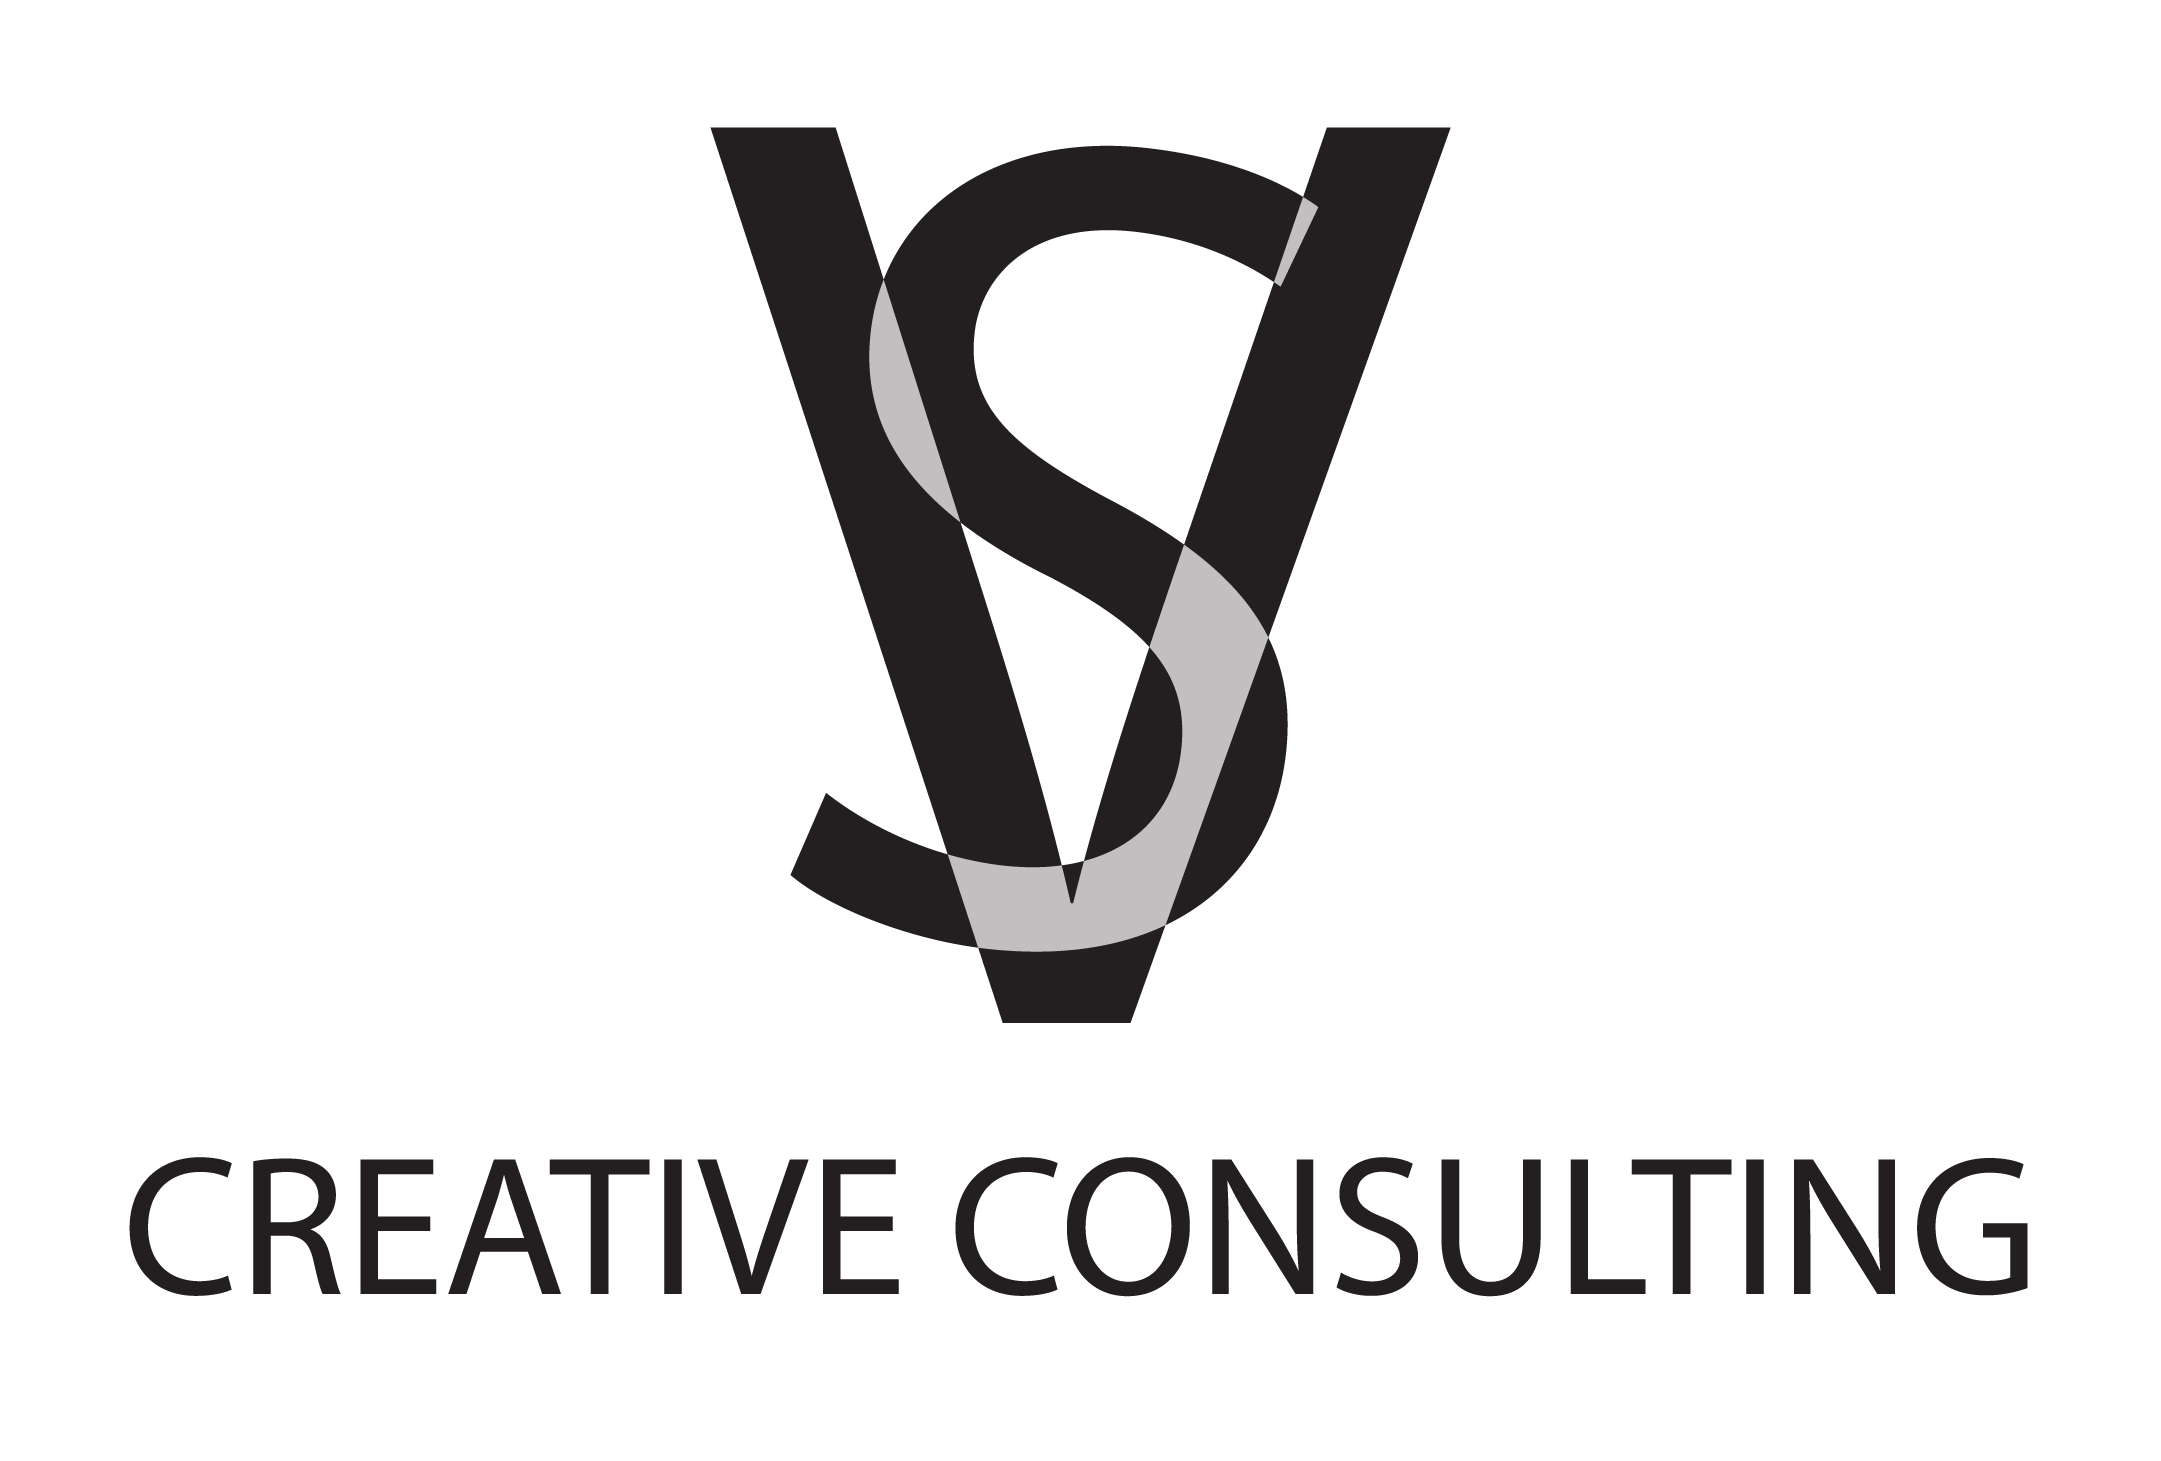 VS Creative Consulting